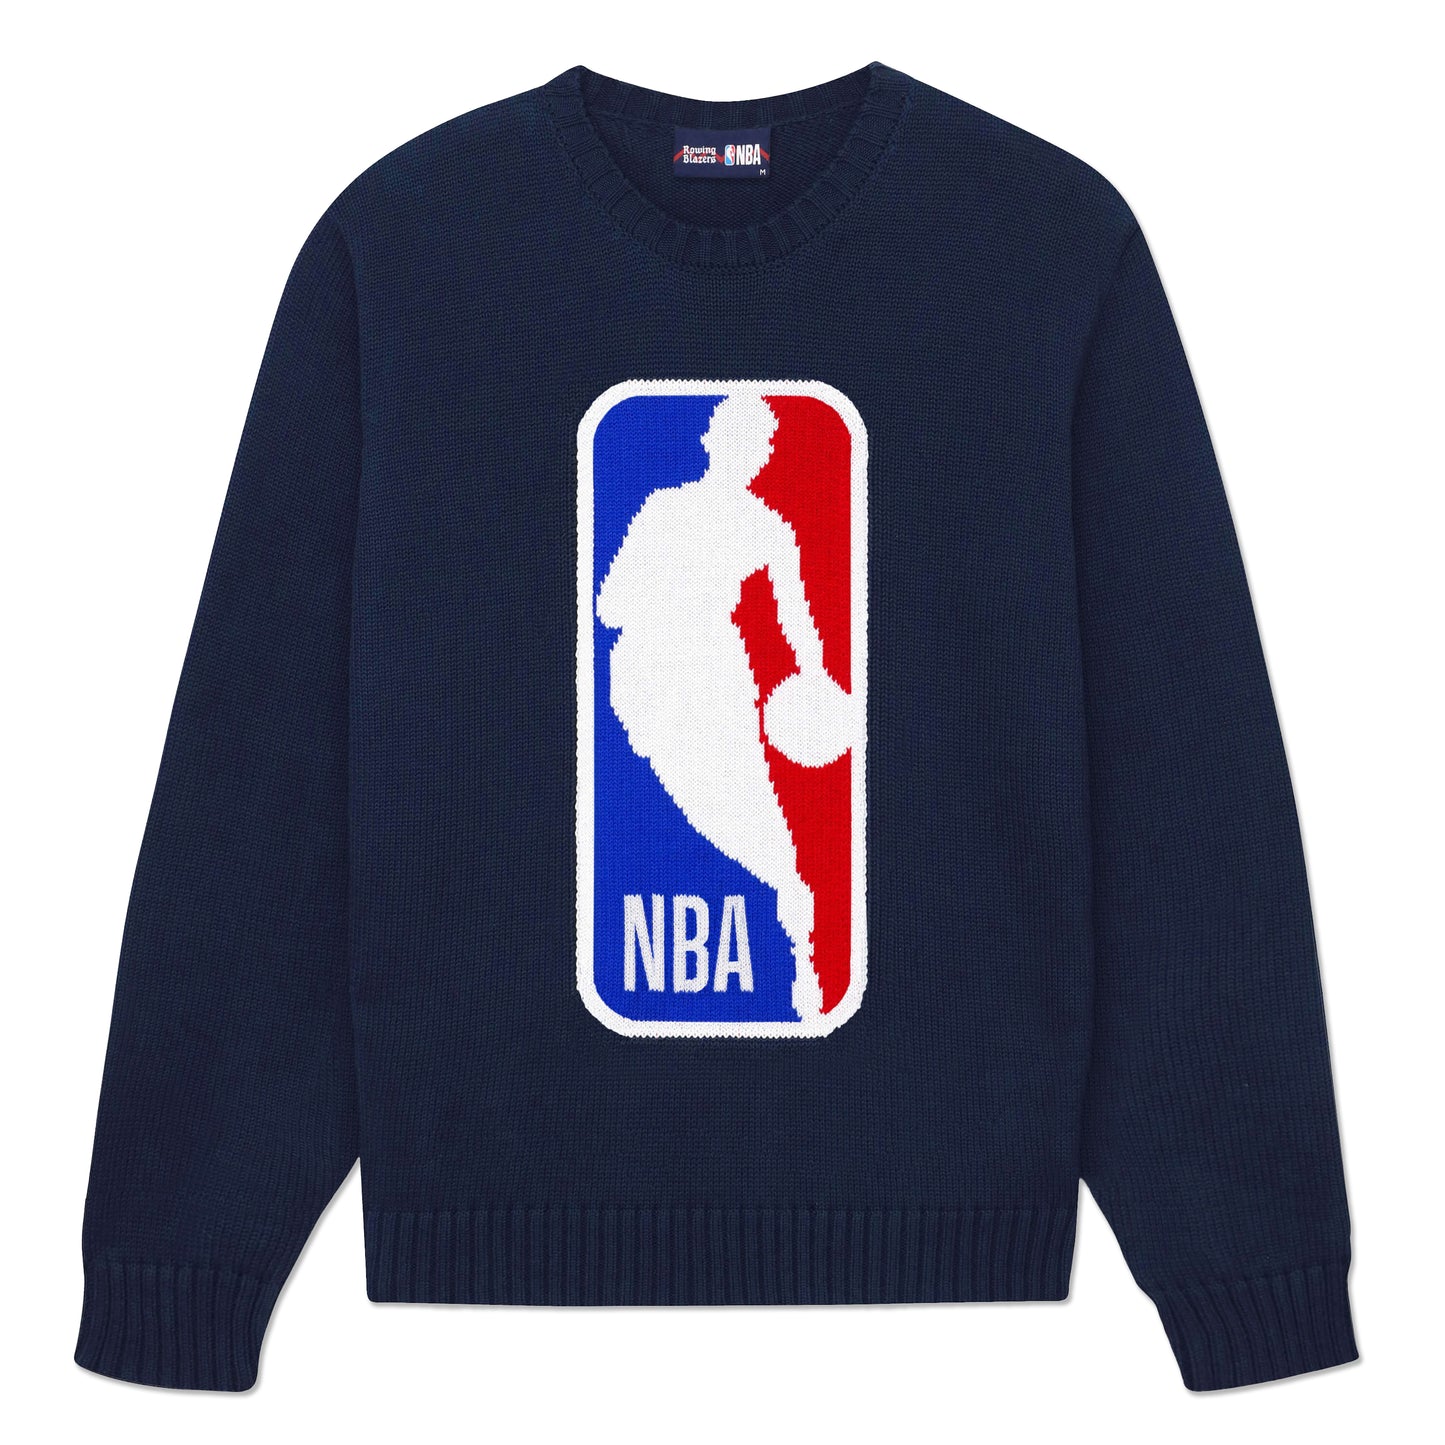 Rowing Blazers x NBA Logo Sweater